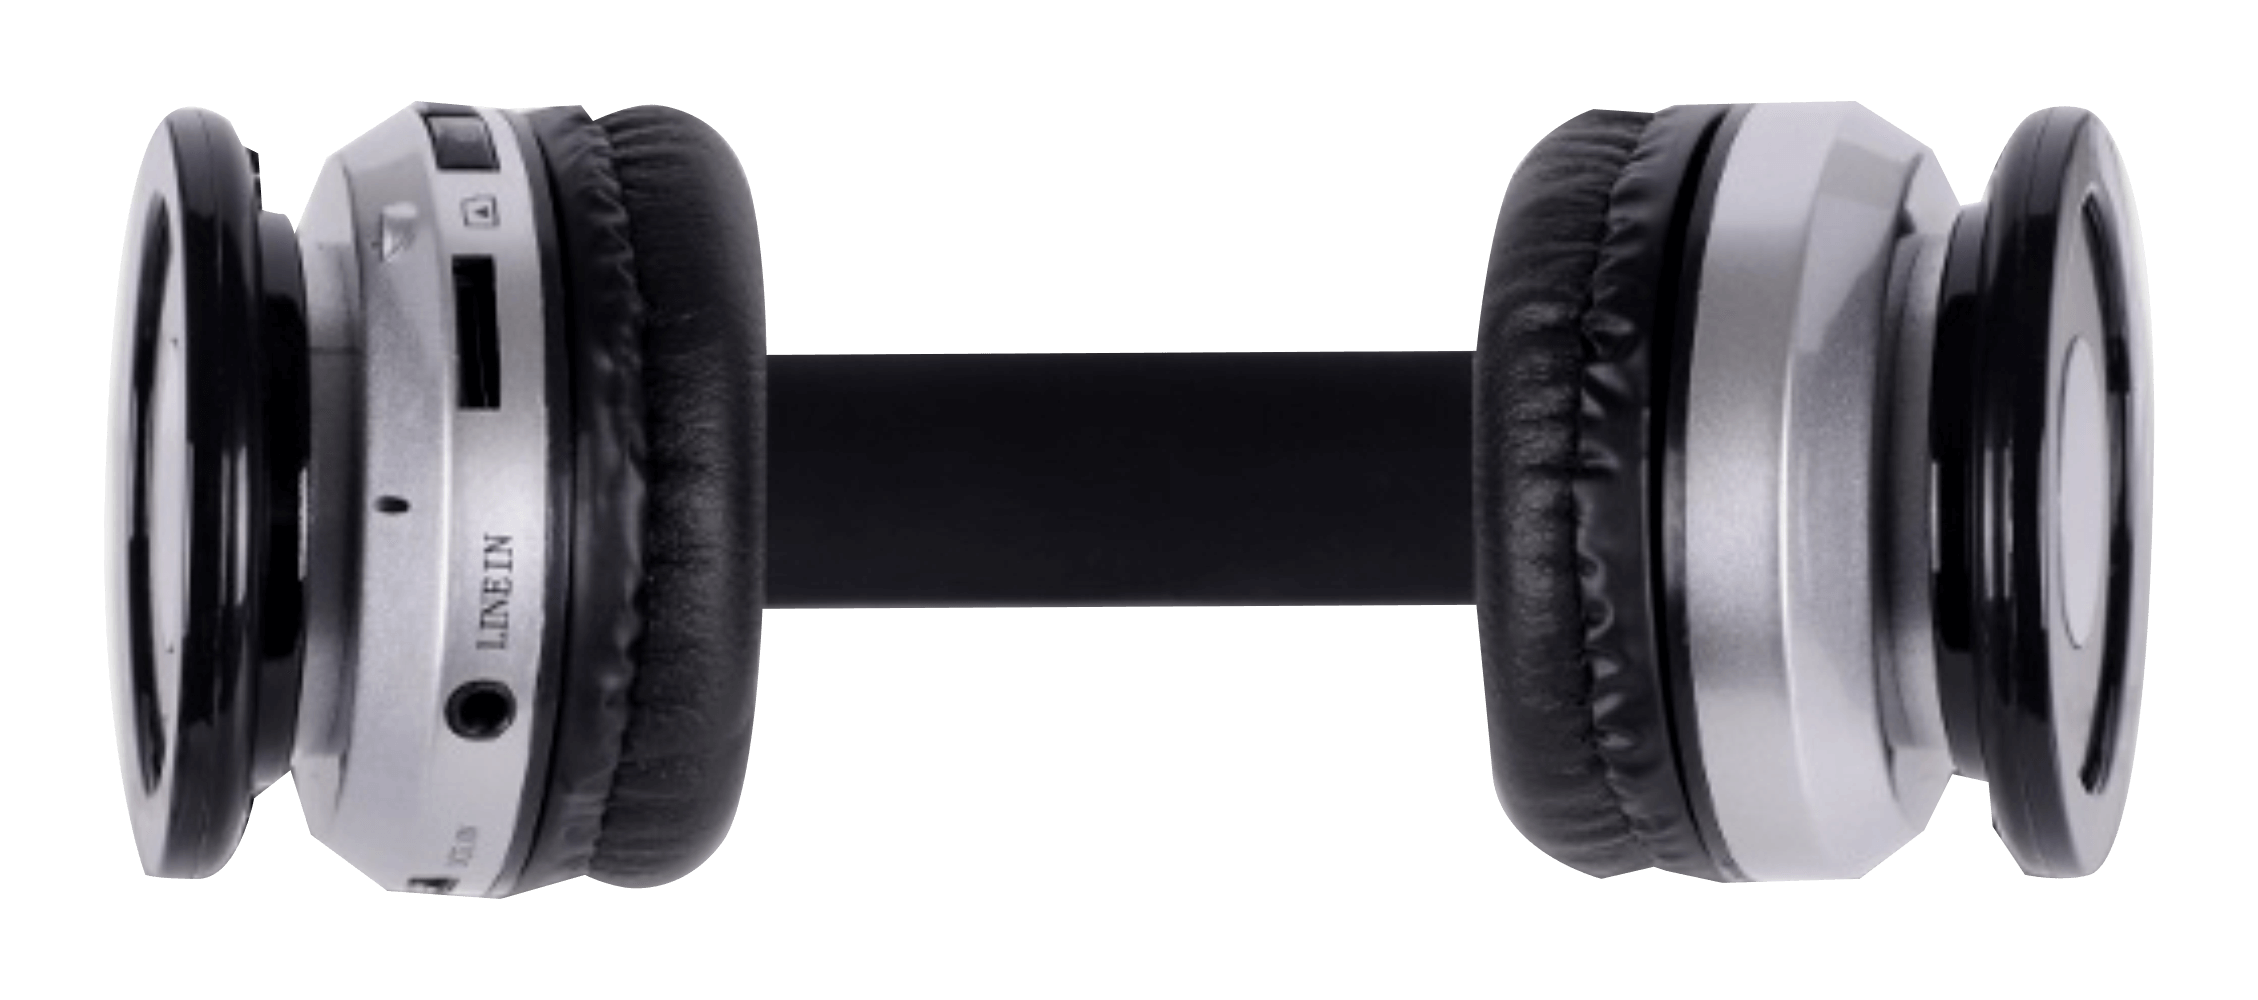 LG K52 bluetooth fejhallgató Rebeltec Crystal fekete